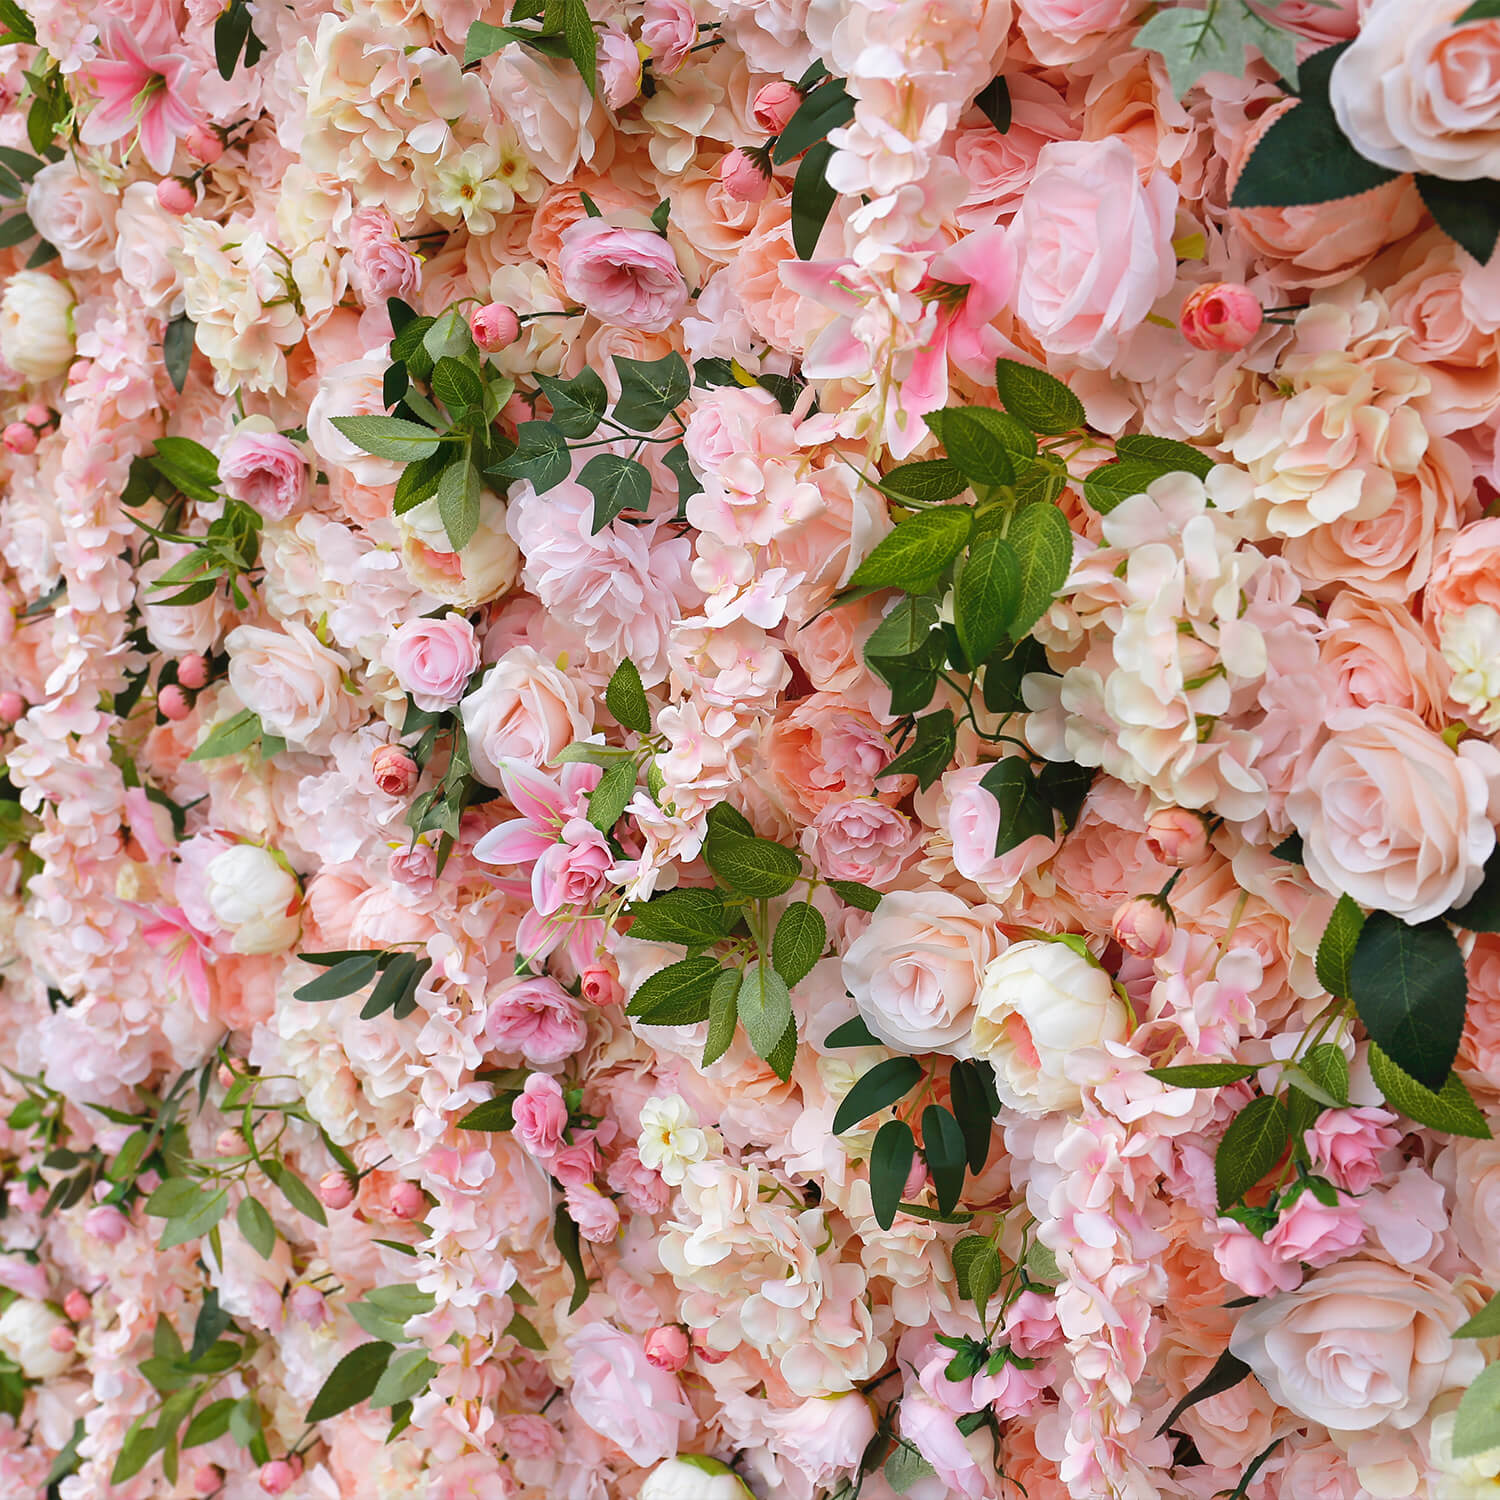 Flowerva murmure d'amour mur de fleurs de mariage mur de fond de scène de fête